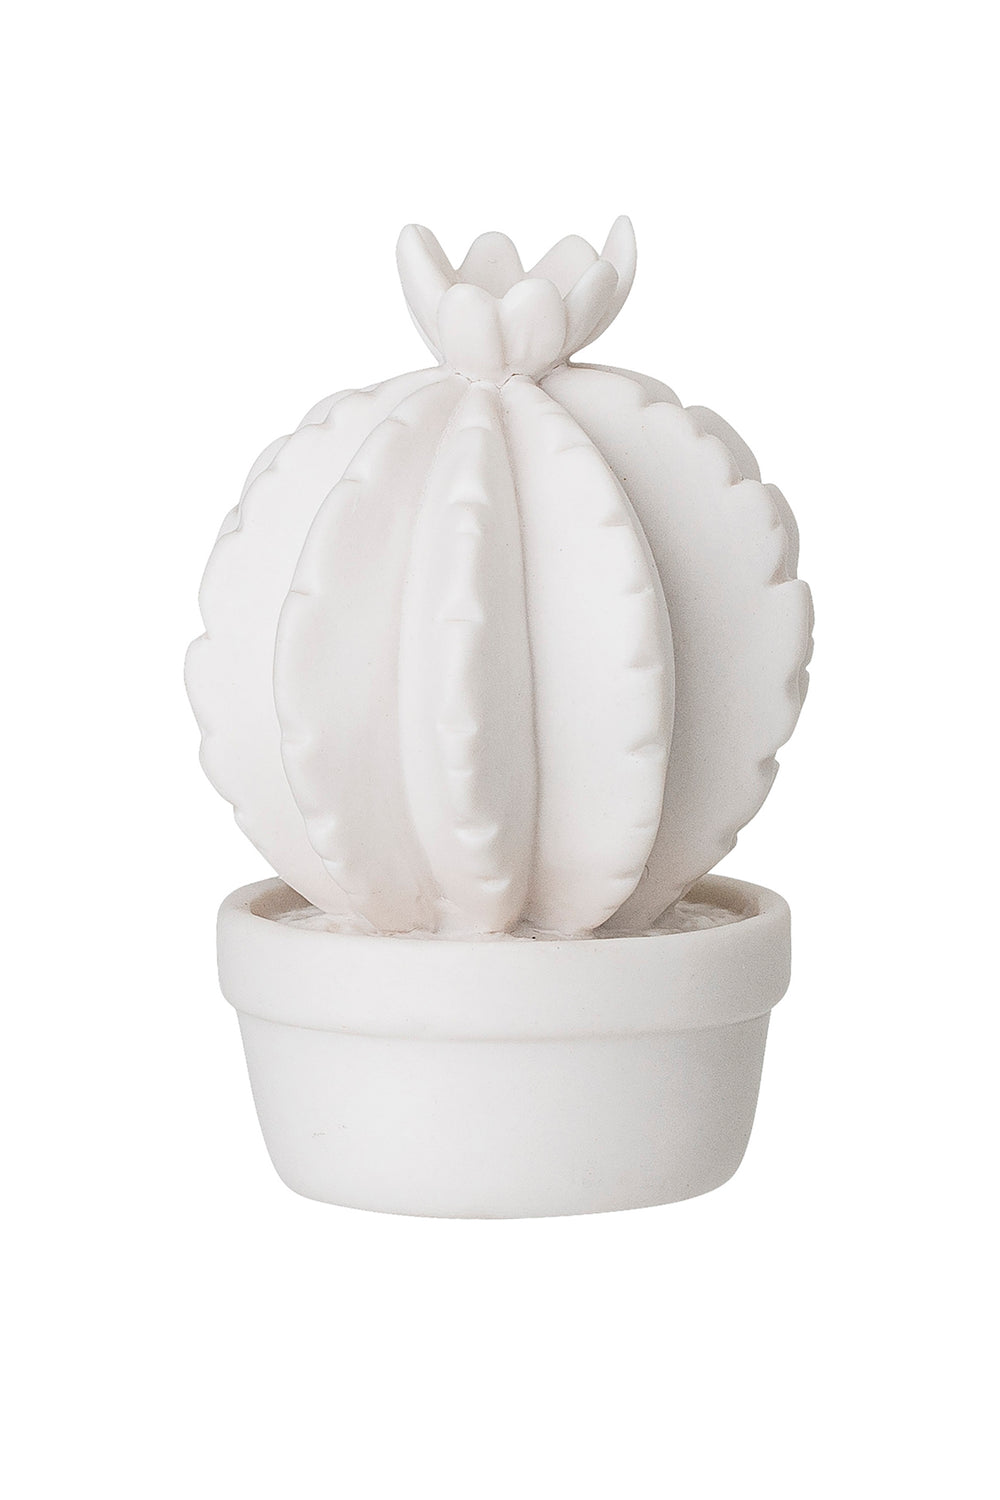 Mini White Cactus, Decor, Bloomingville - 3LittlePicks